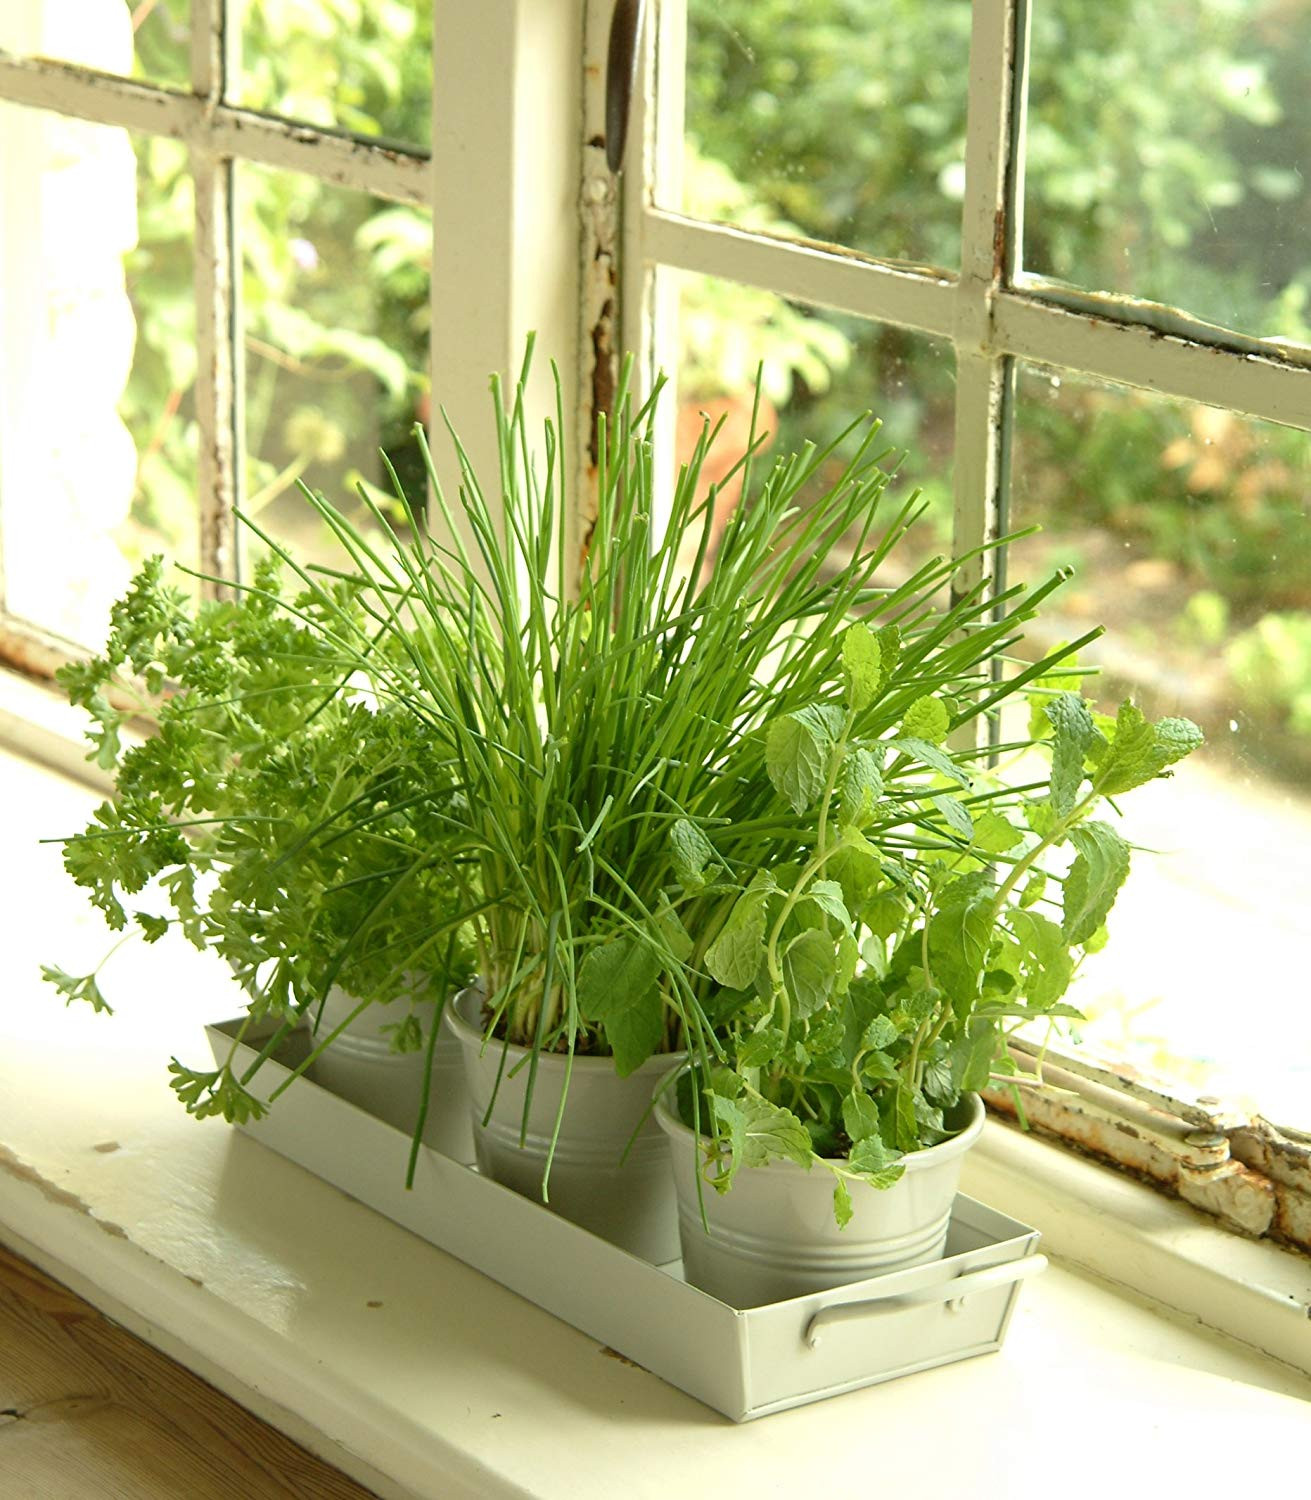 Best ideas about Indoor Herb Planter
. Save or Pin Kitchen Herb Pots Wooden Planter Window Sill Garden Plant Now.